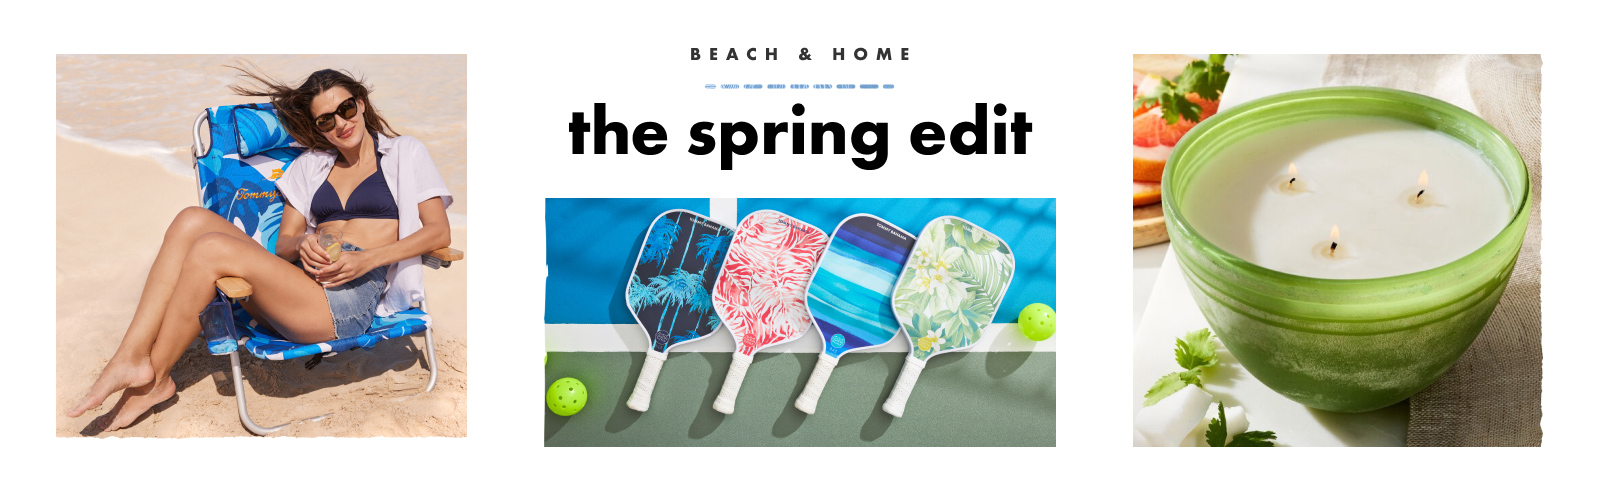 Beach & Home - The Spring Edit